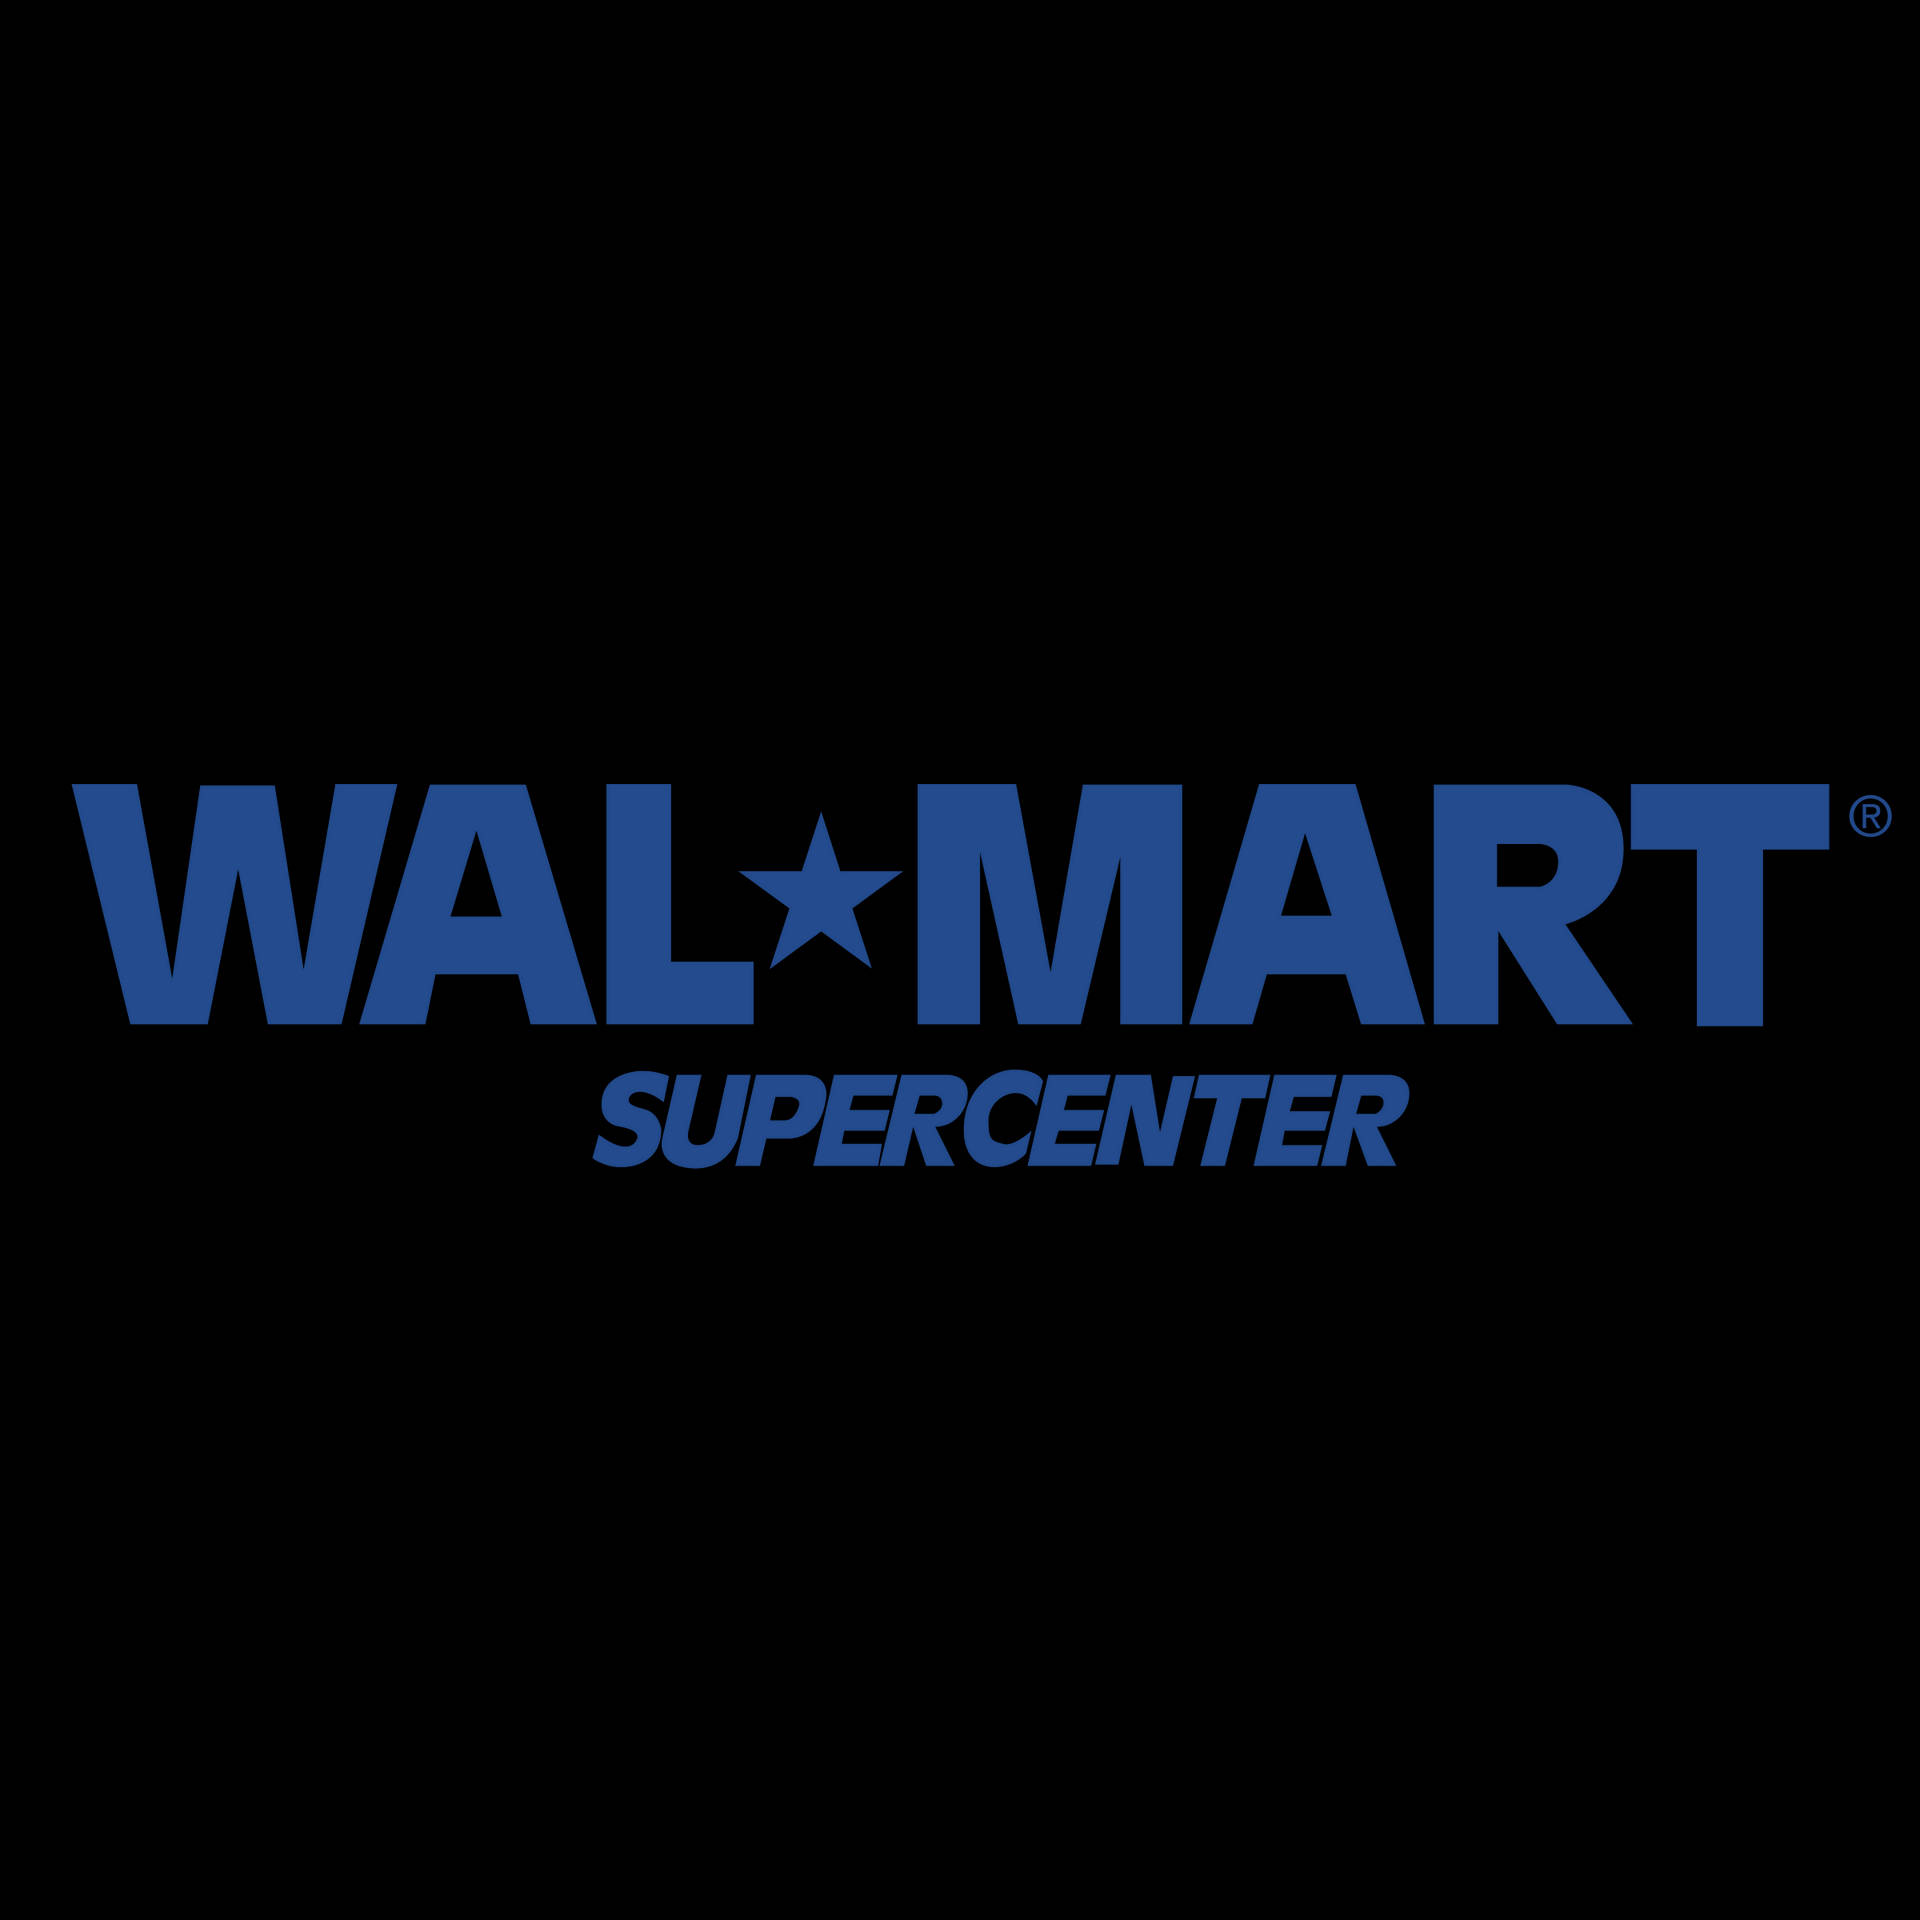 Walmartsupercenter Logotypen. Wallpaper